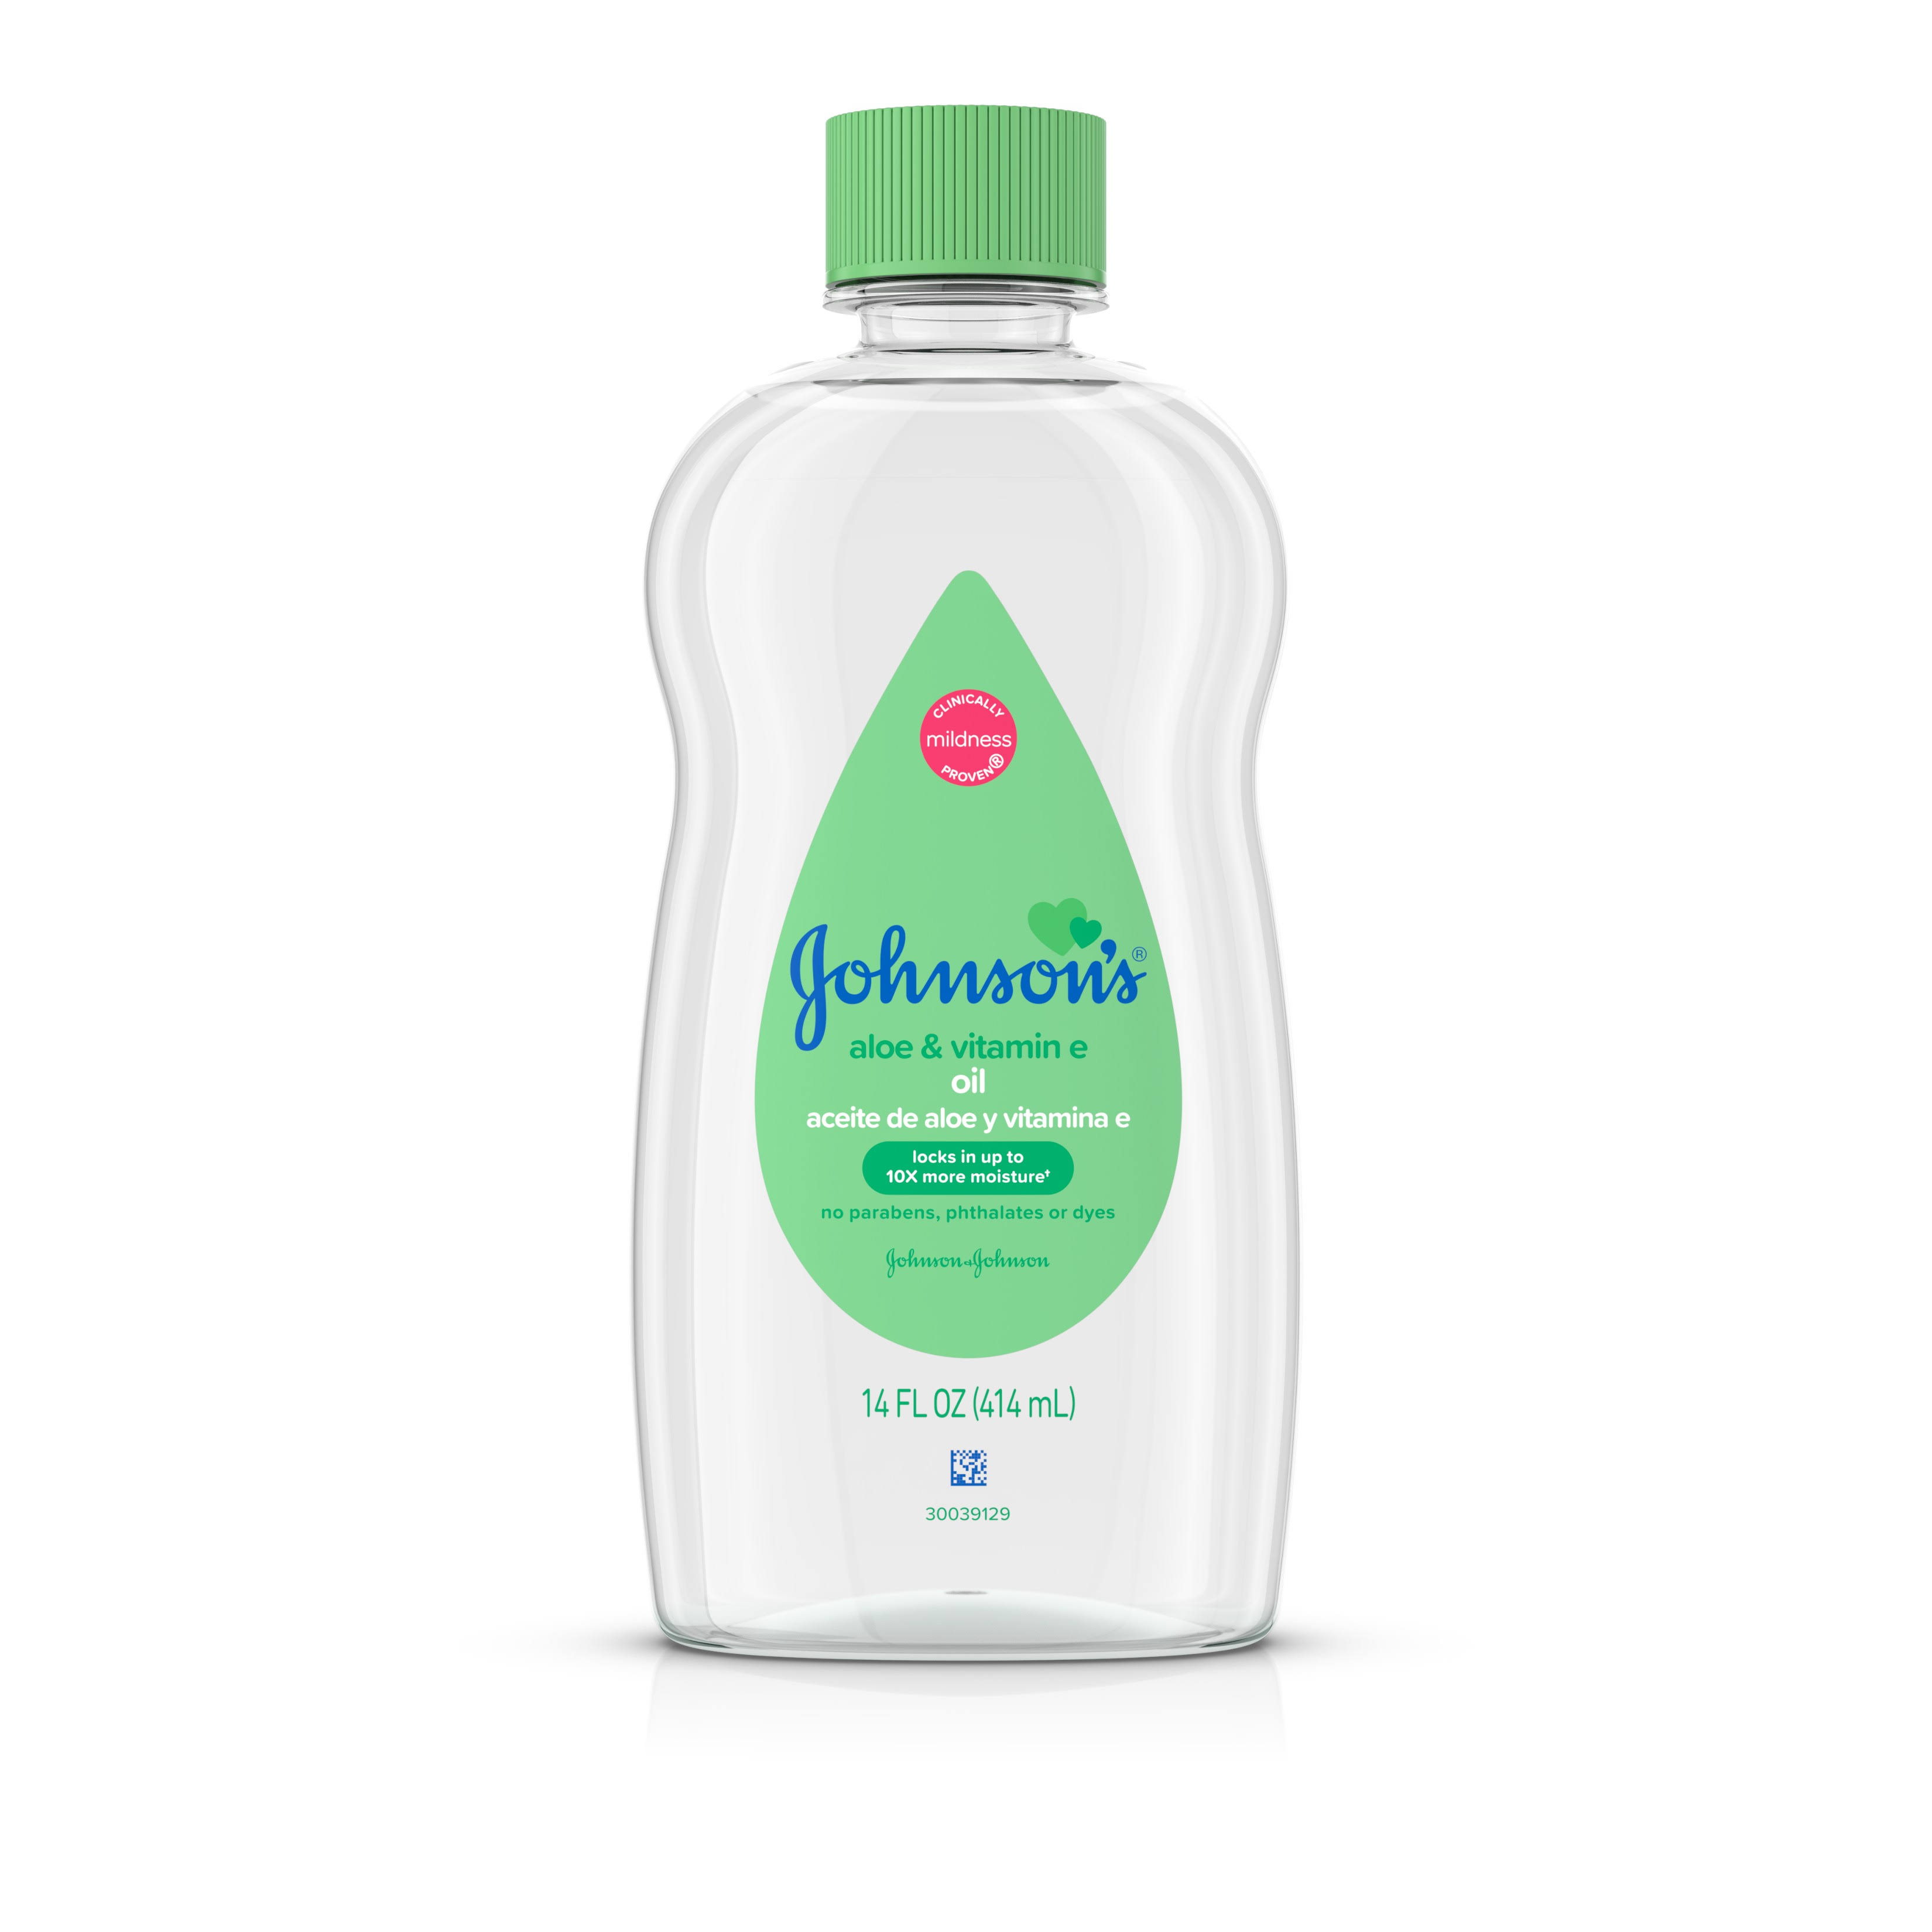 Johnson and Johnson Baby Oil - with Aloe Vera and Vitamin E, 14oz